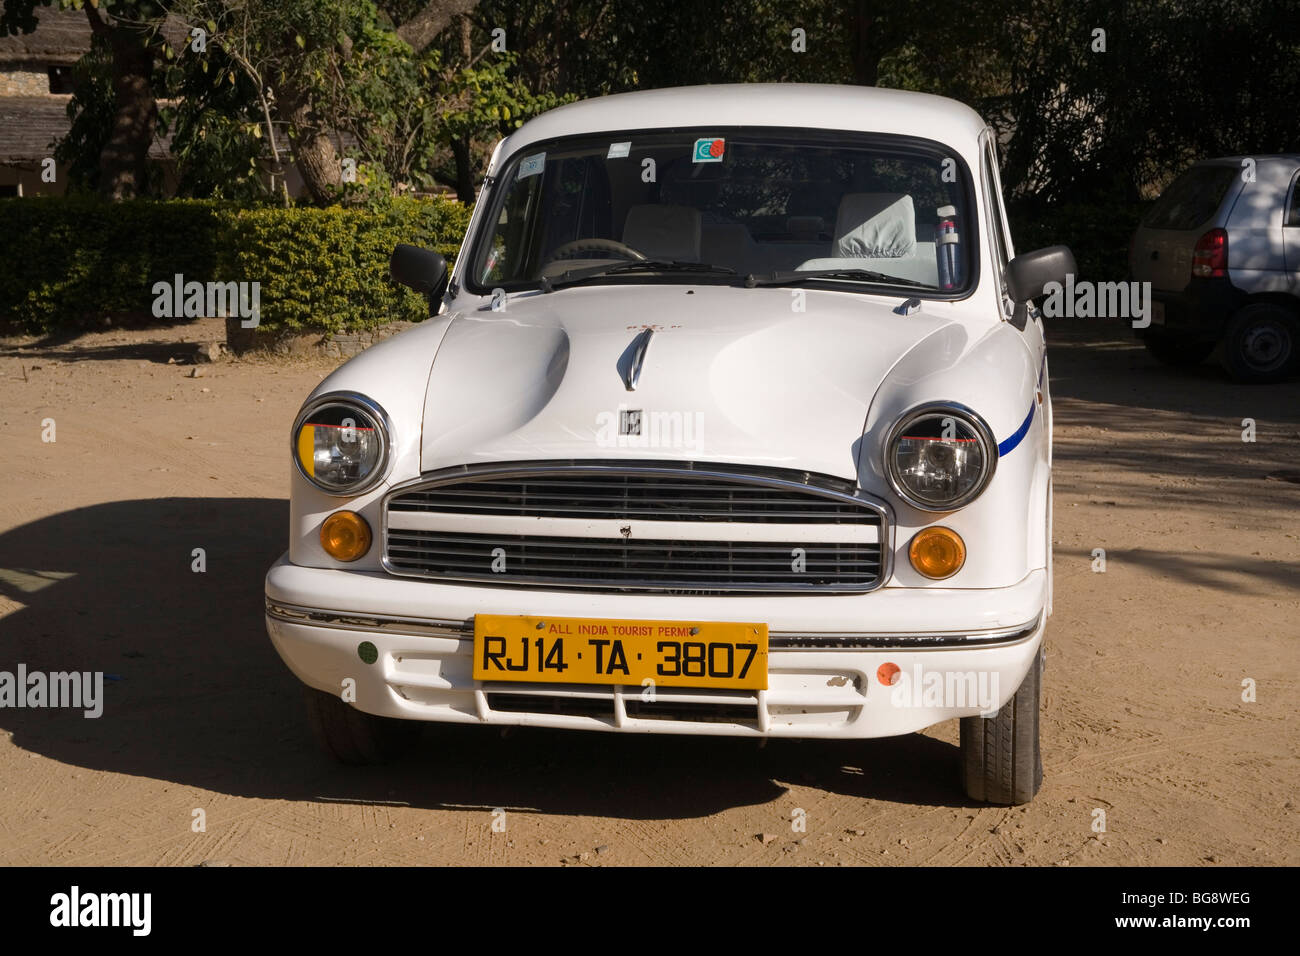 India ambassador car Stock Photo - Alamy